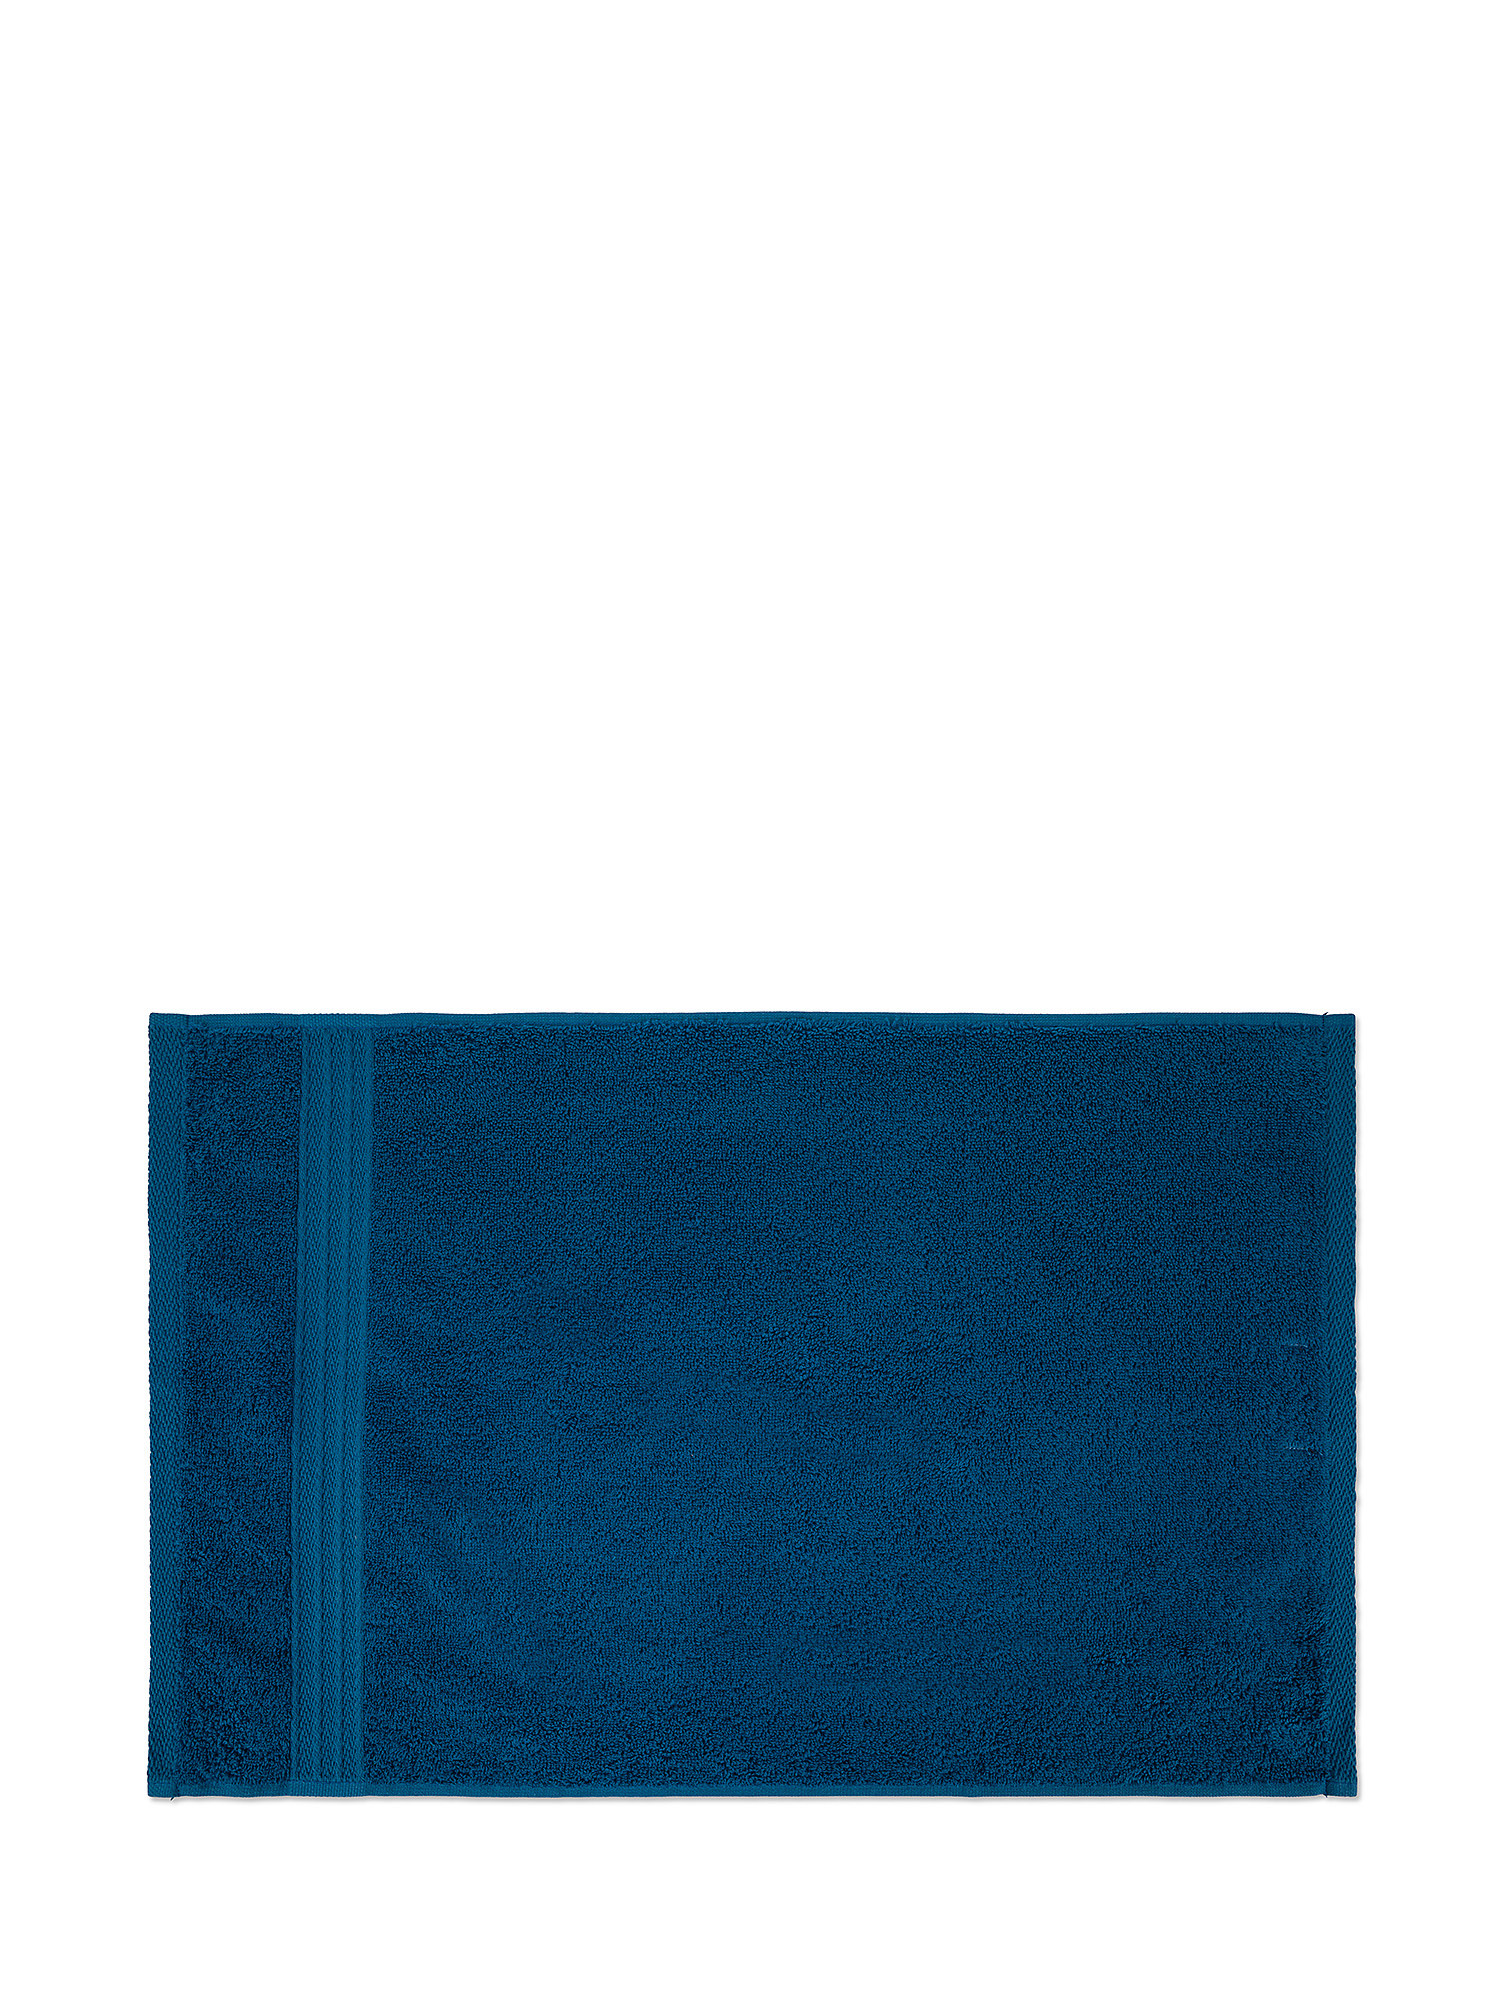 Asciugamano puro cotone tinta unita Zefiro, Blu, large image number 1